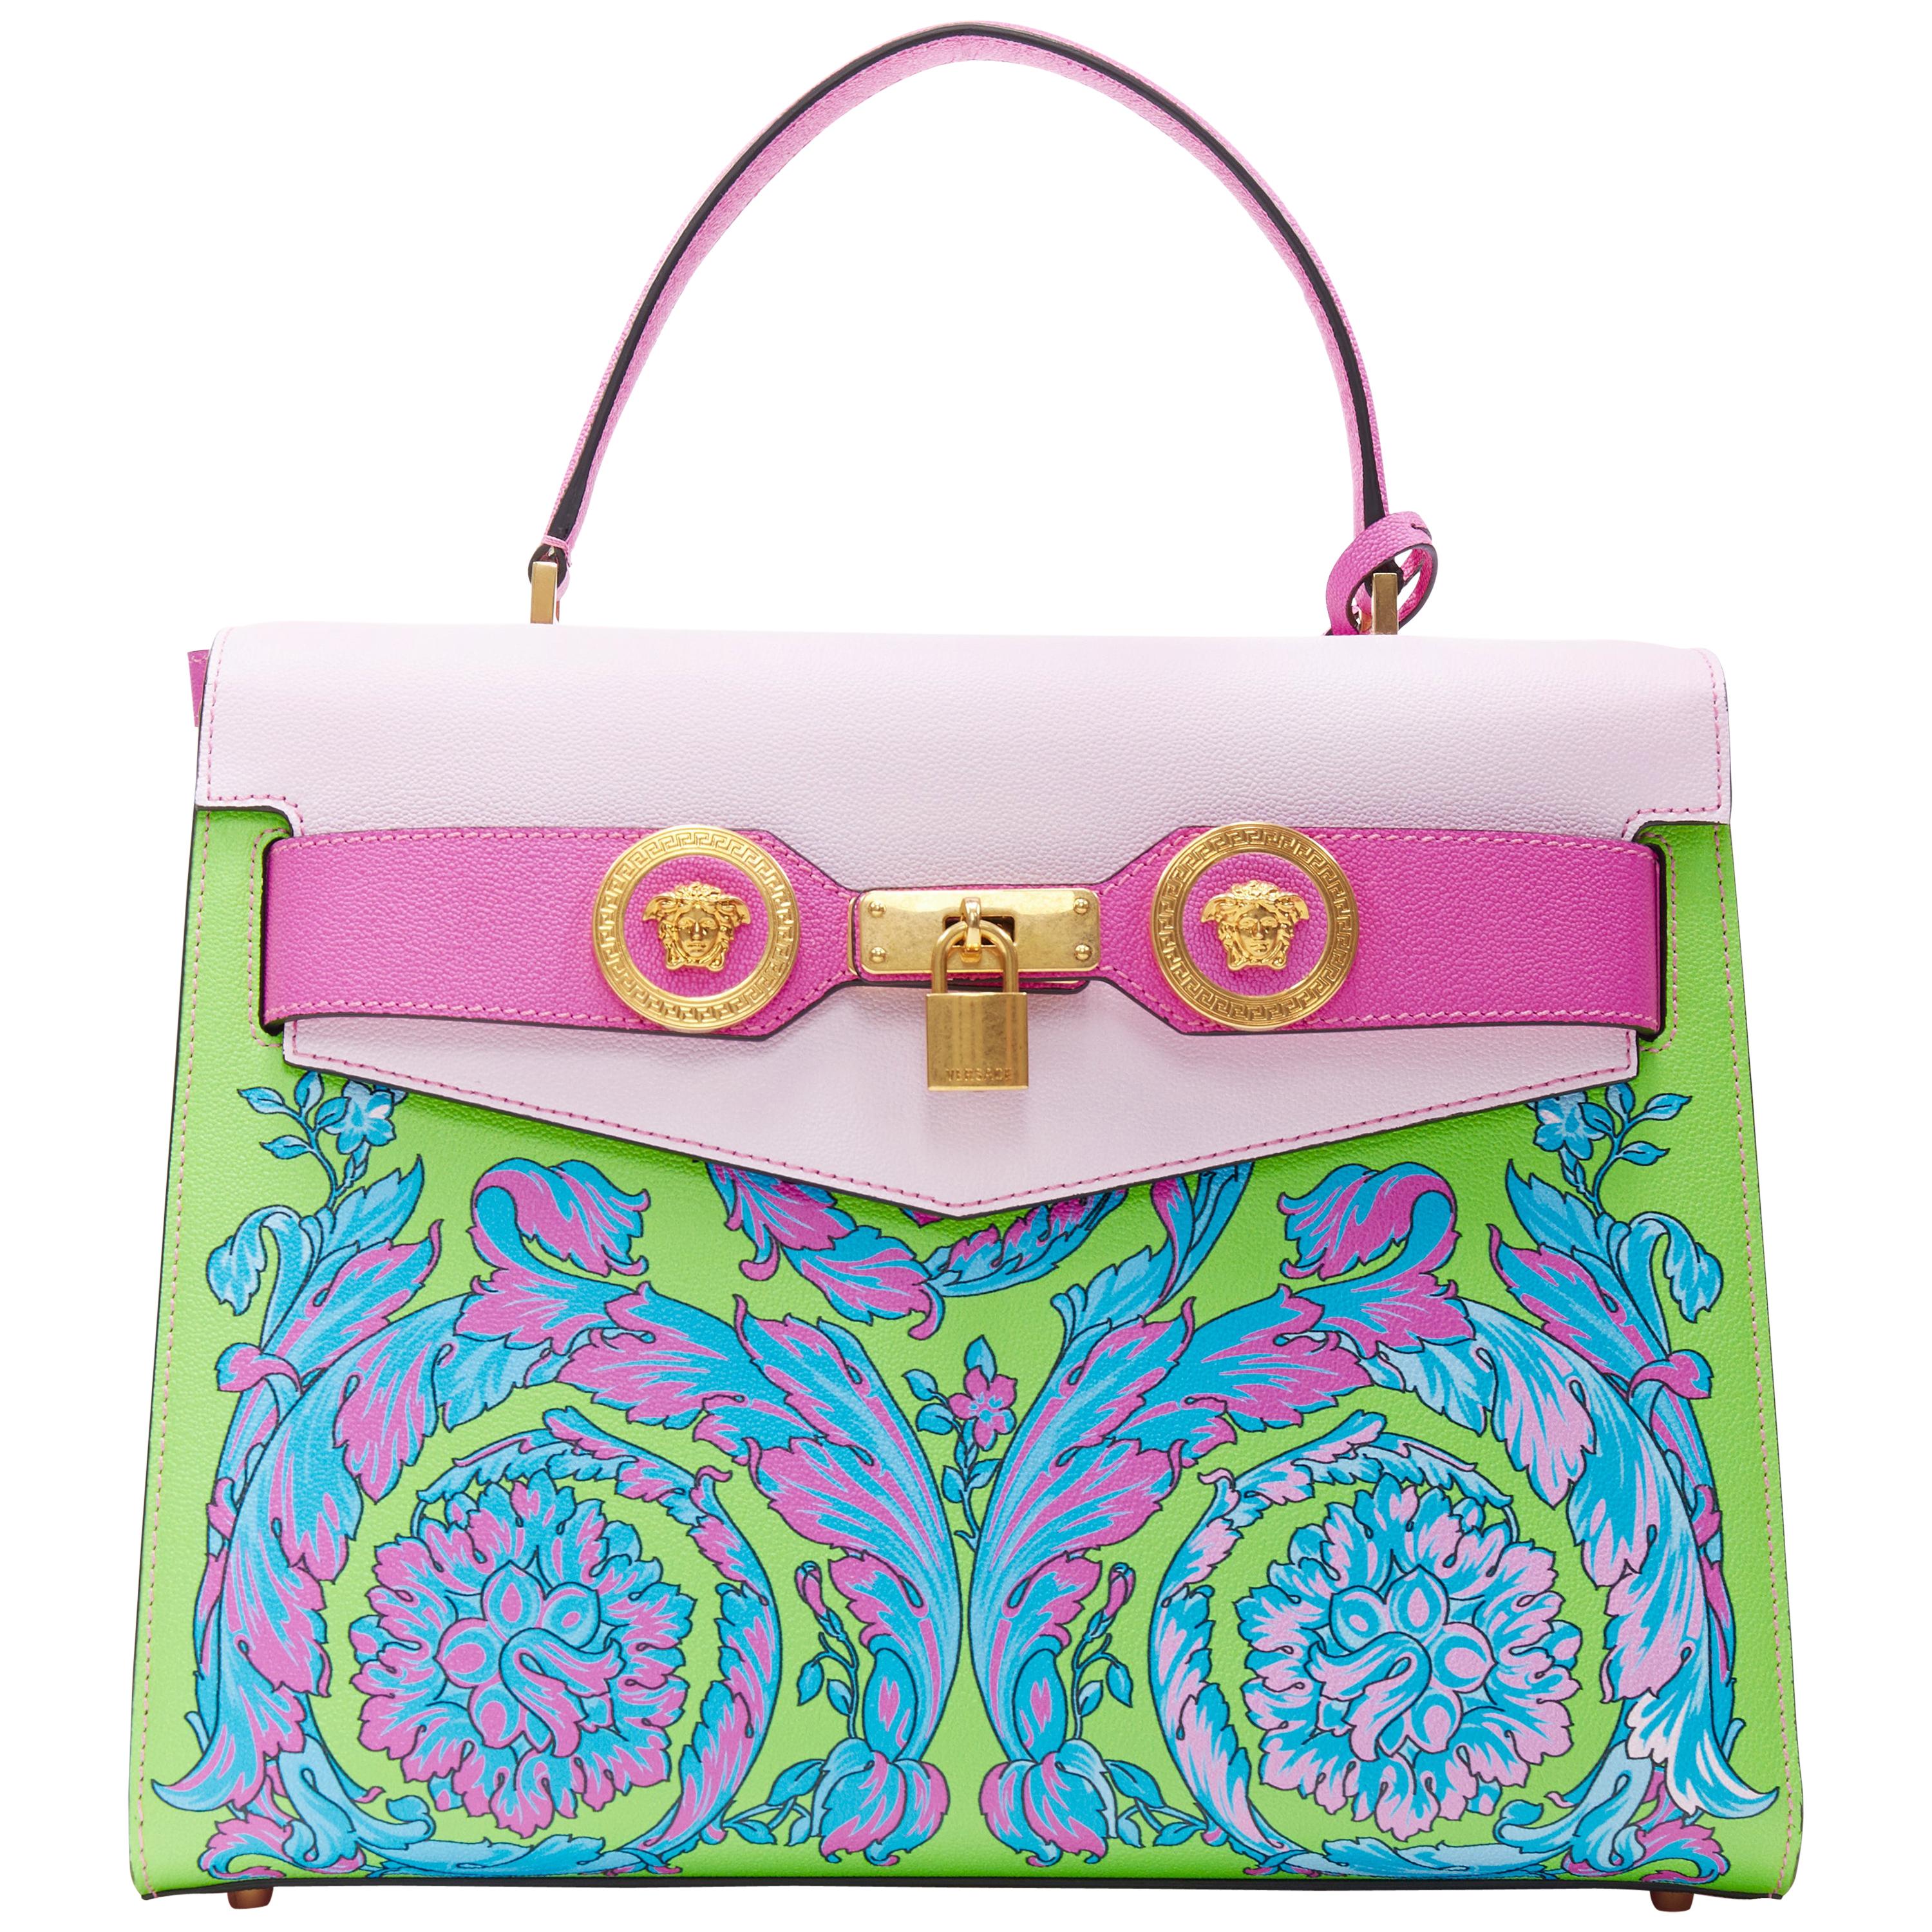 new VERSACE Diana Tribute Technicolor Baroque print top handle Kelly satchel bag